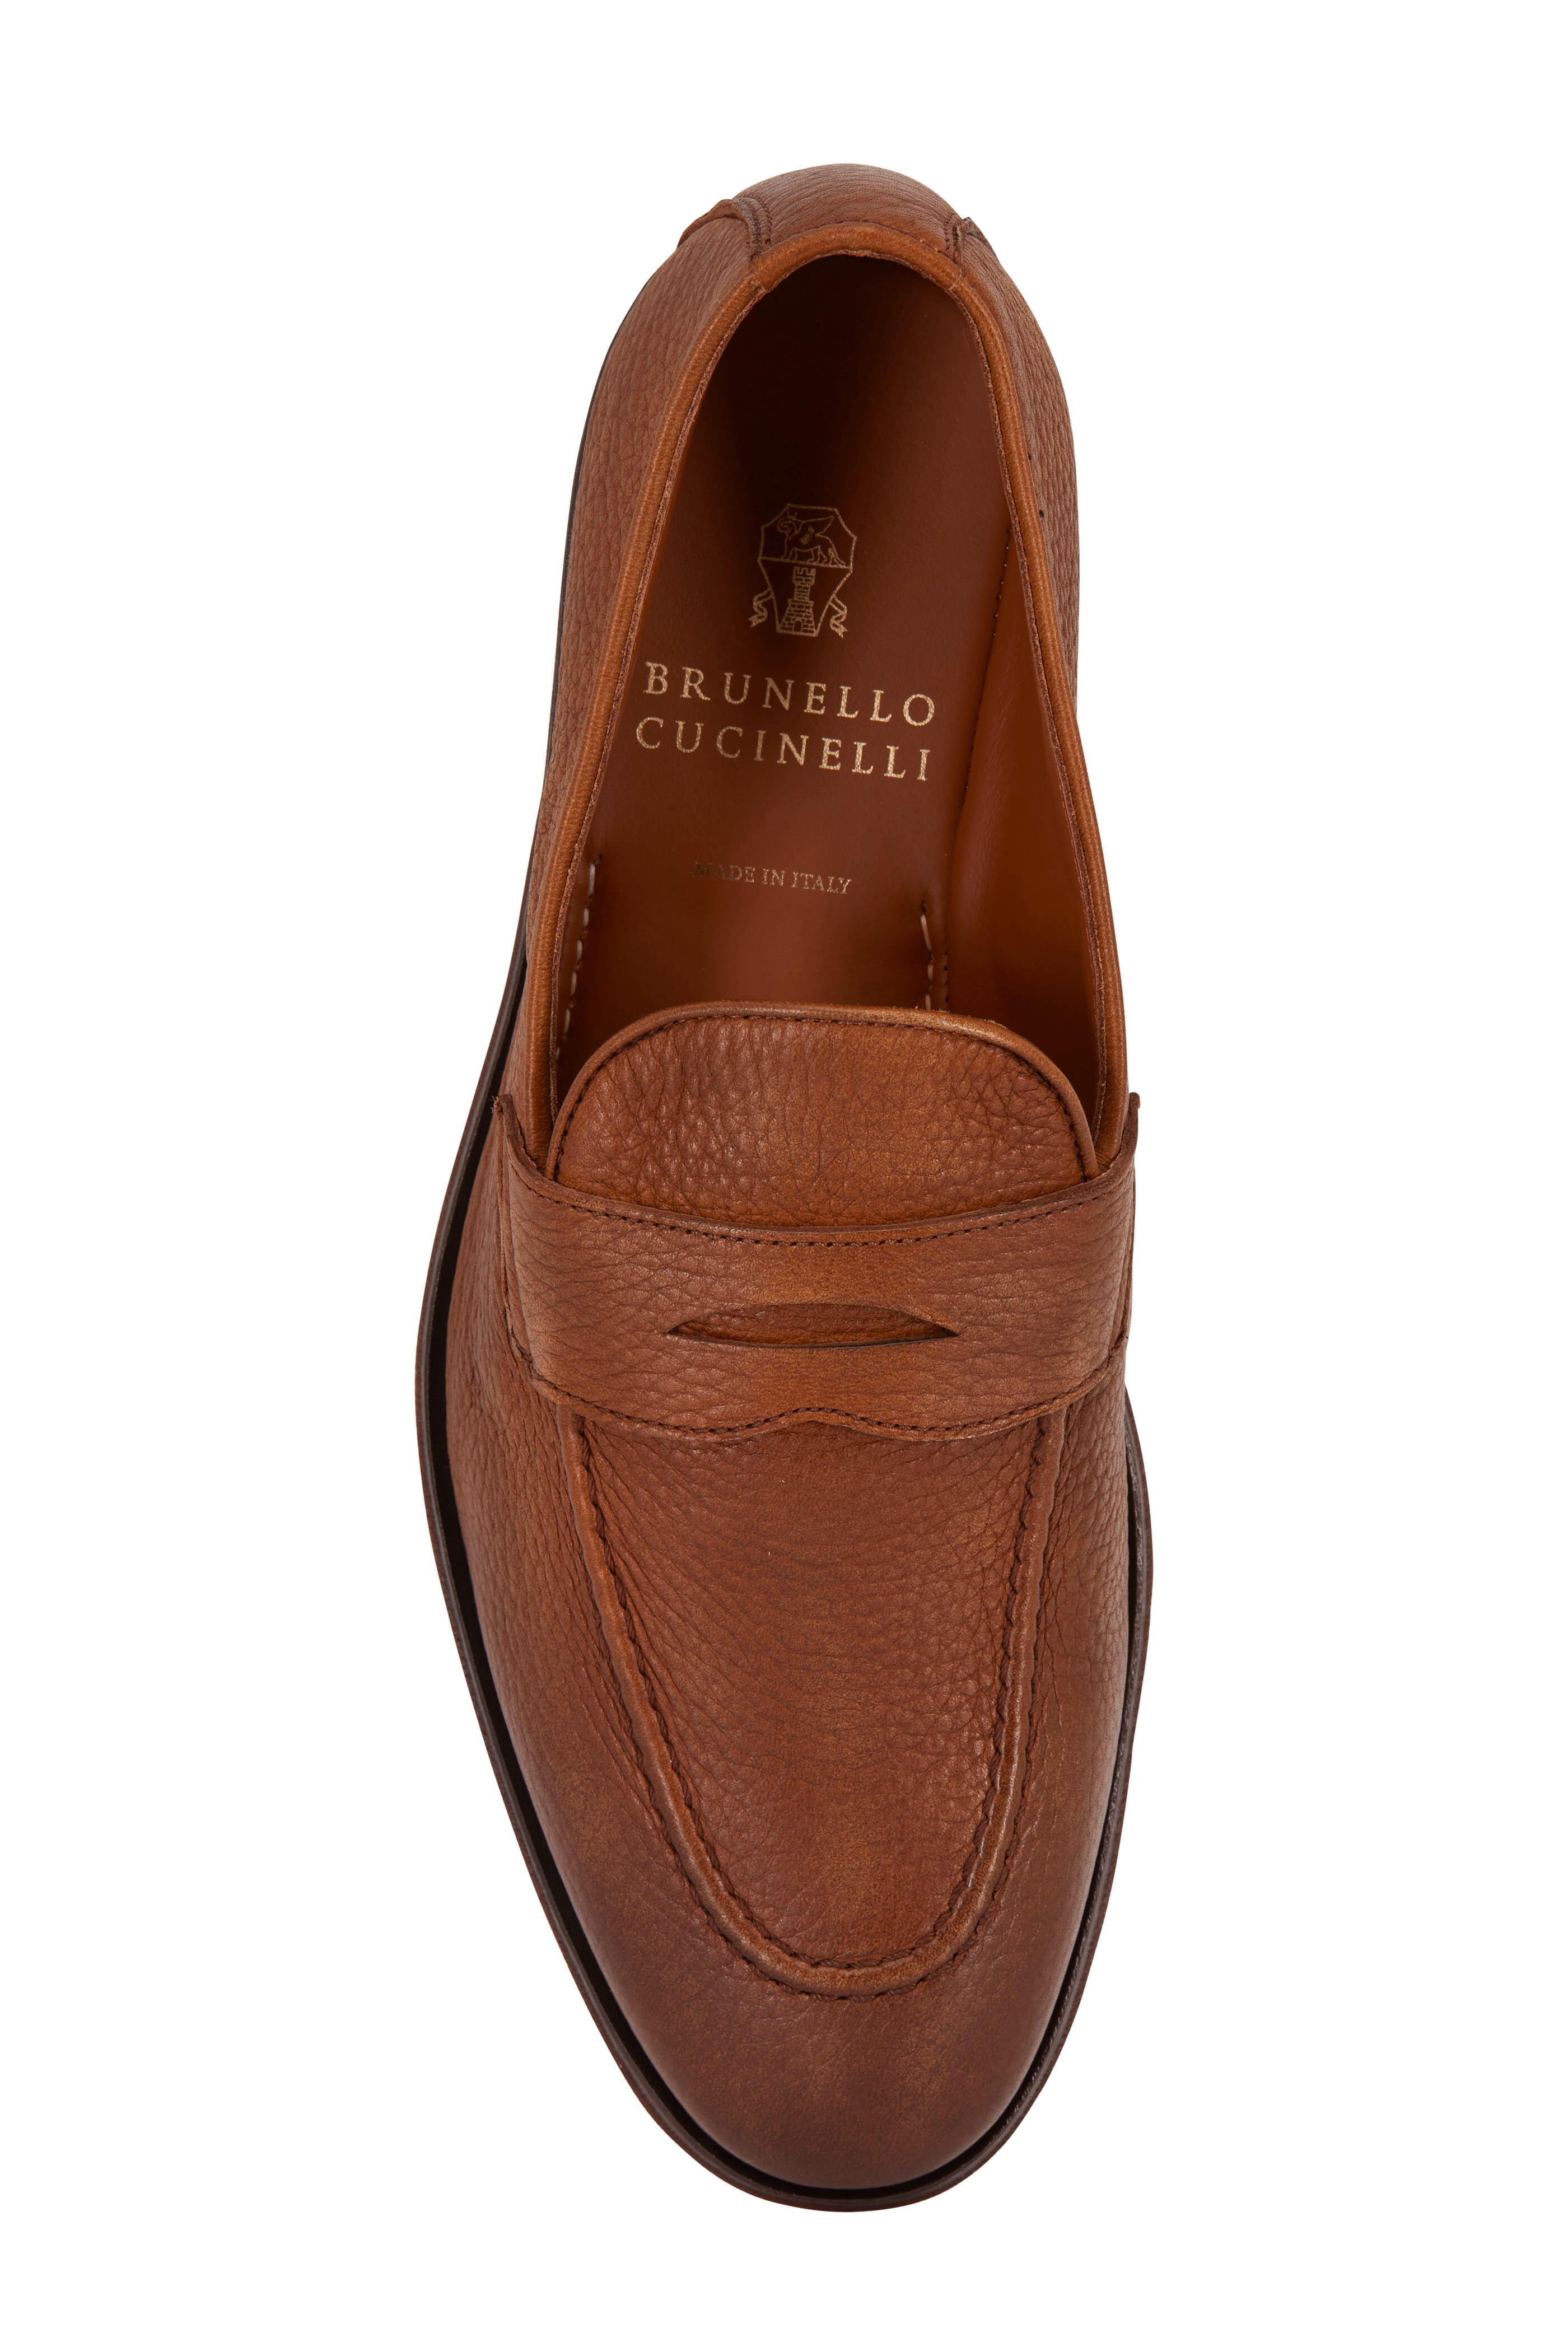 Brunello Cucinelli Bucked Leather Loafers In Neutrals, ModeSens